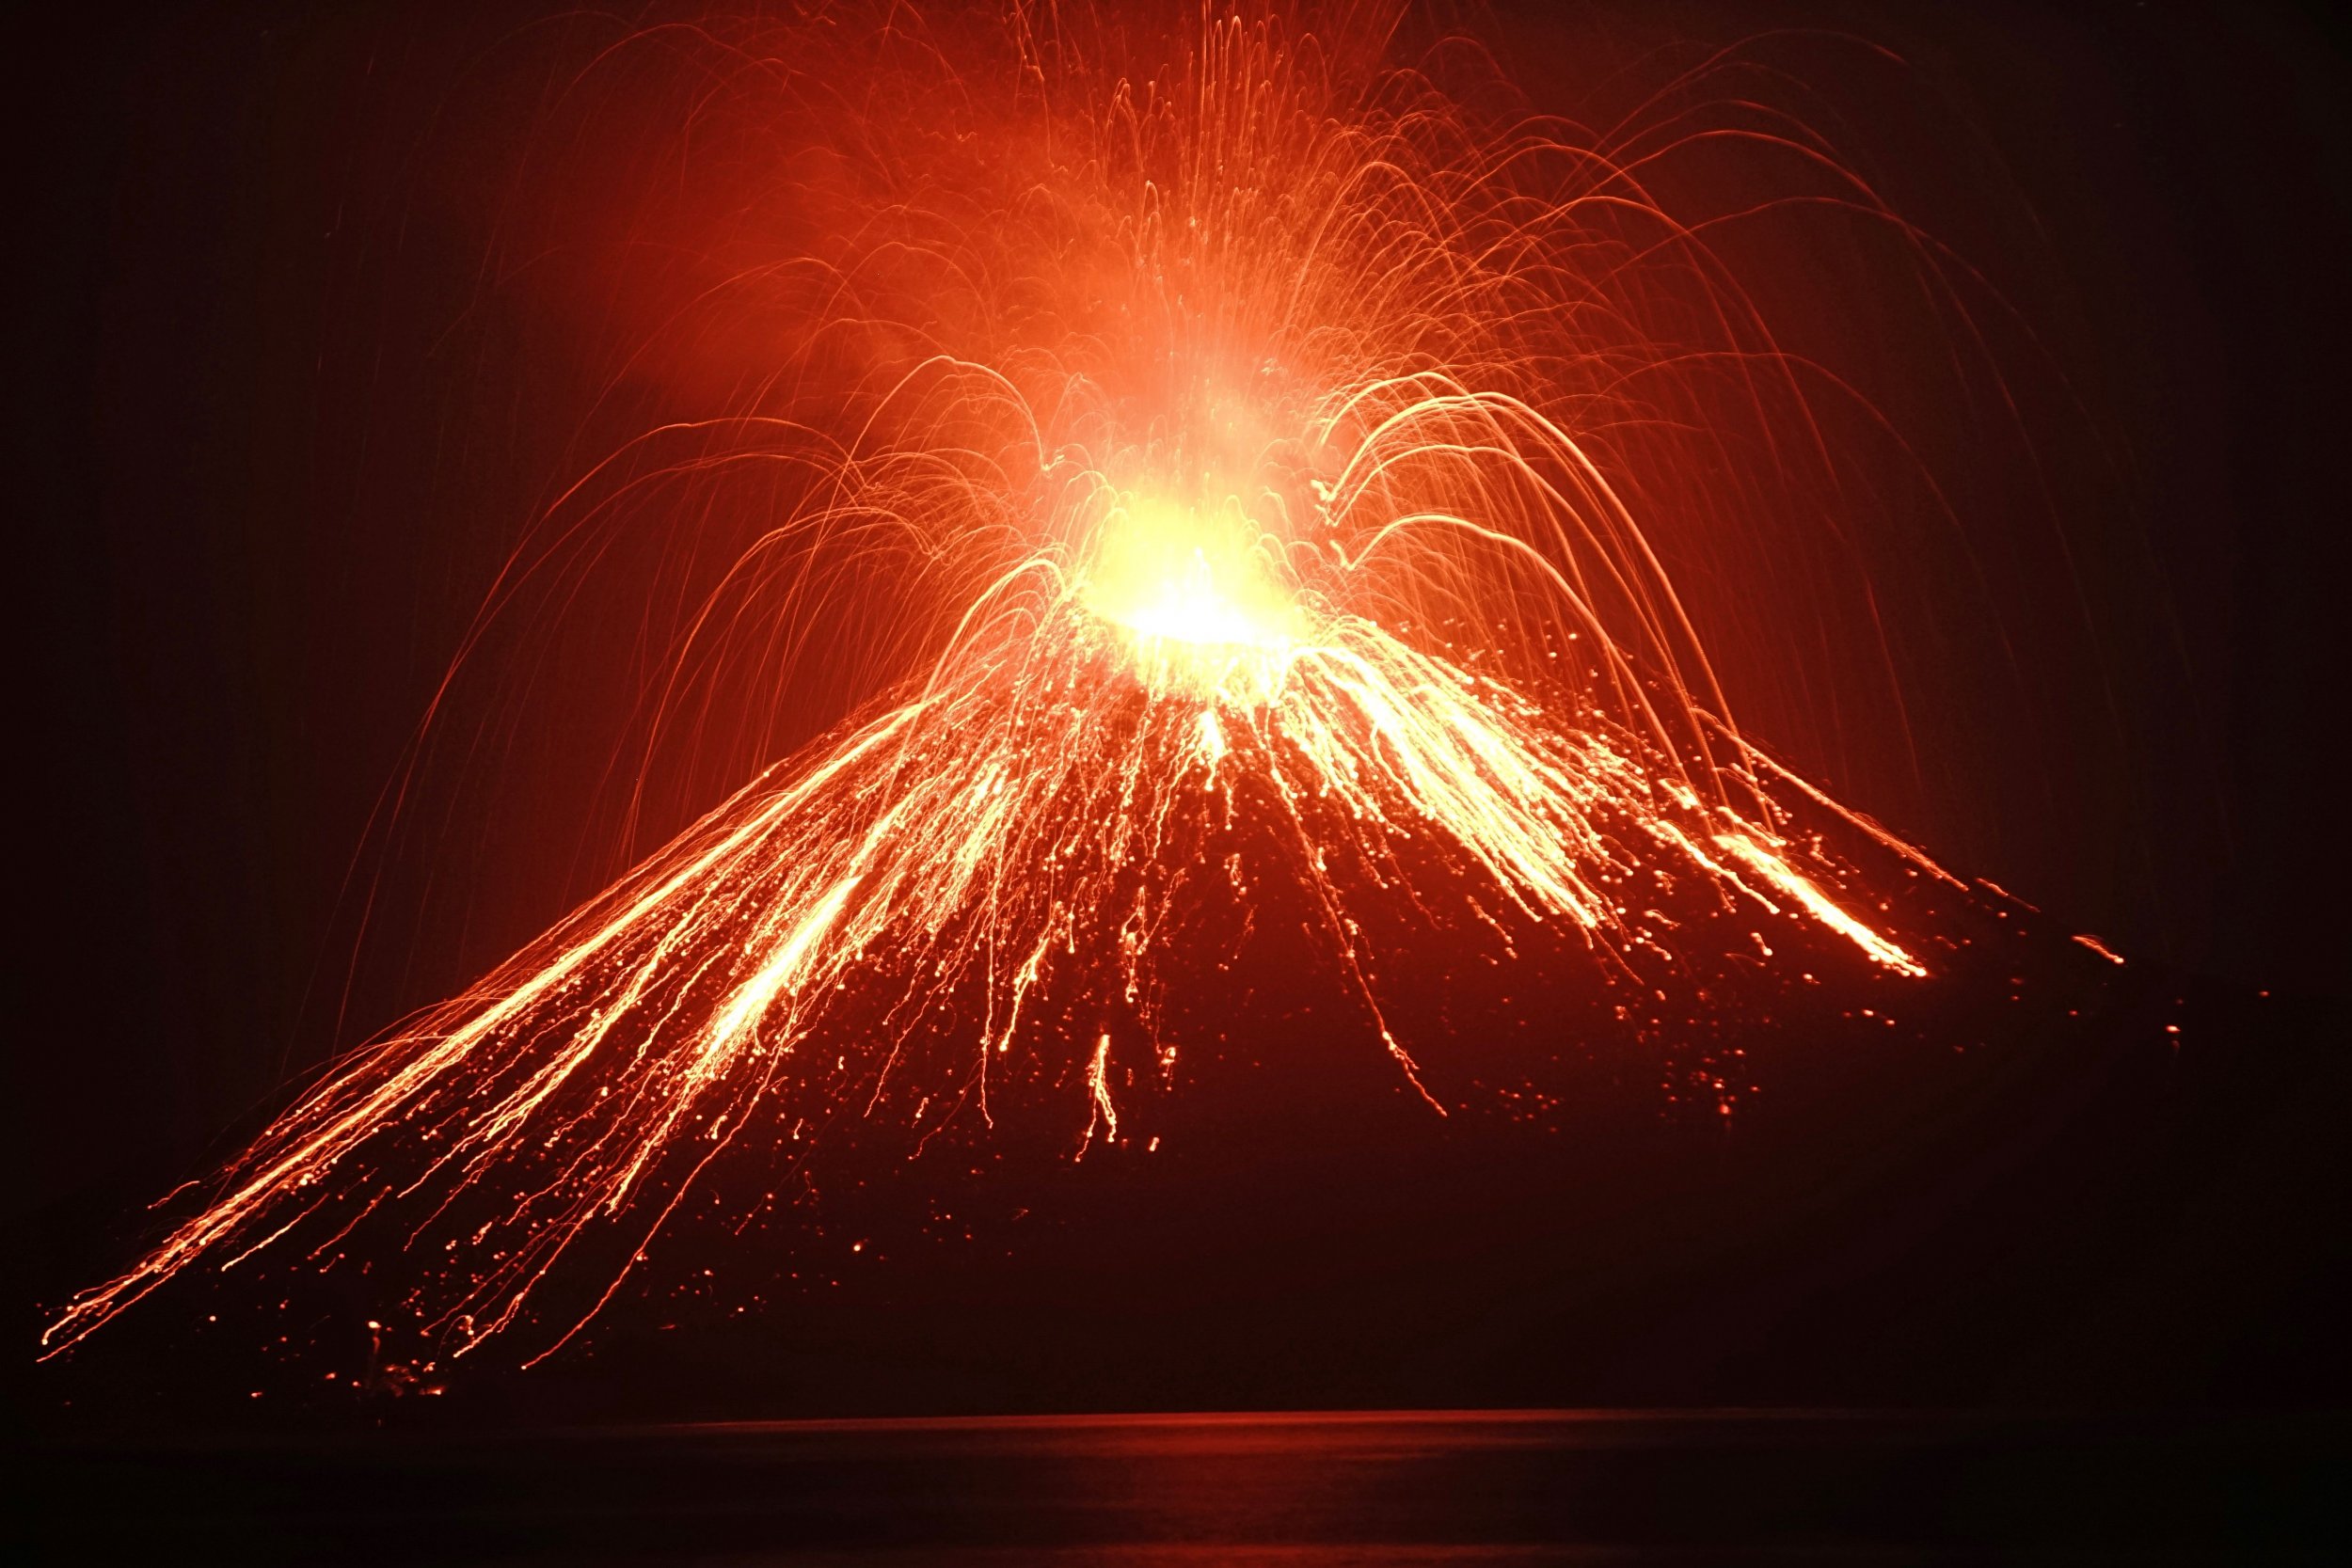 Anak Krakatau  Spectacular Video Shows Volcano  Generating 